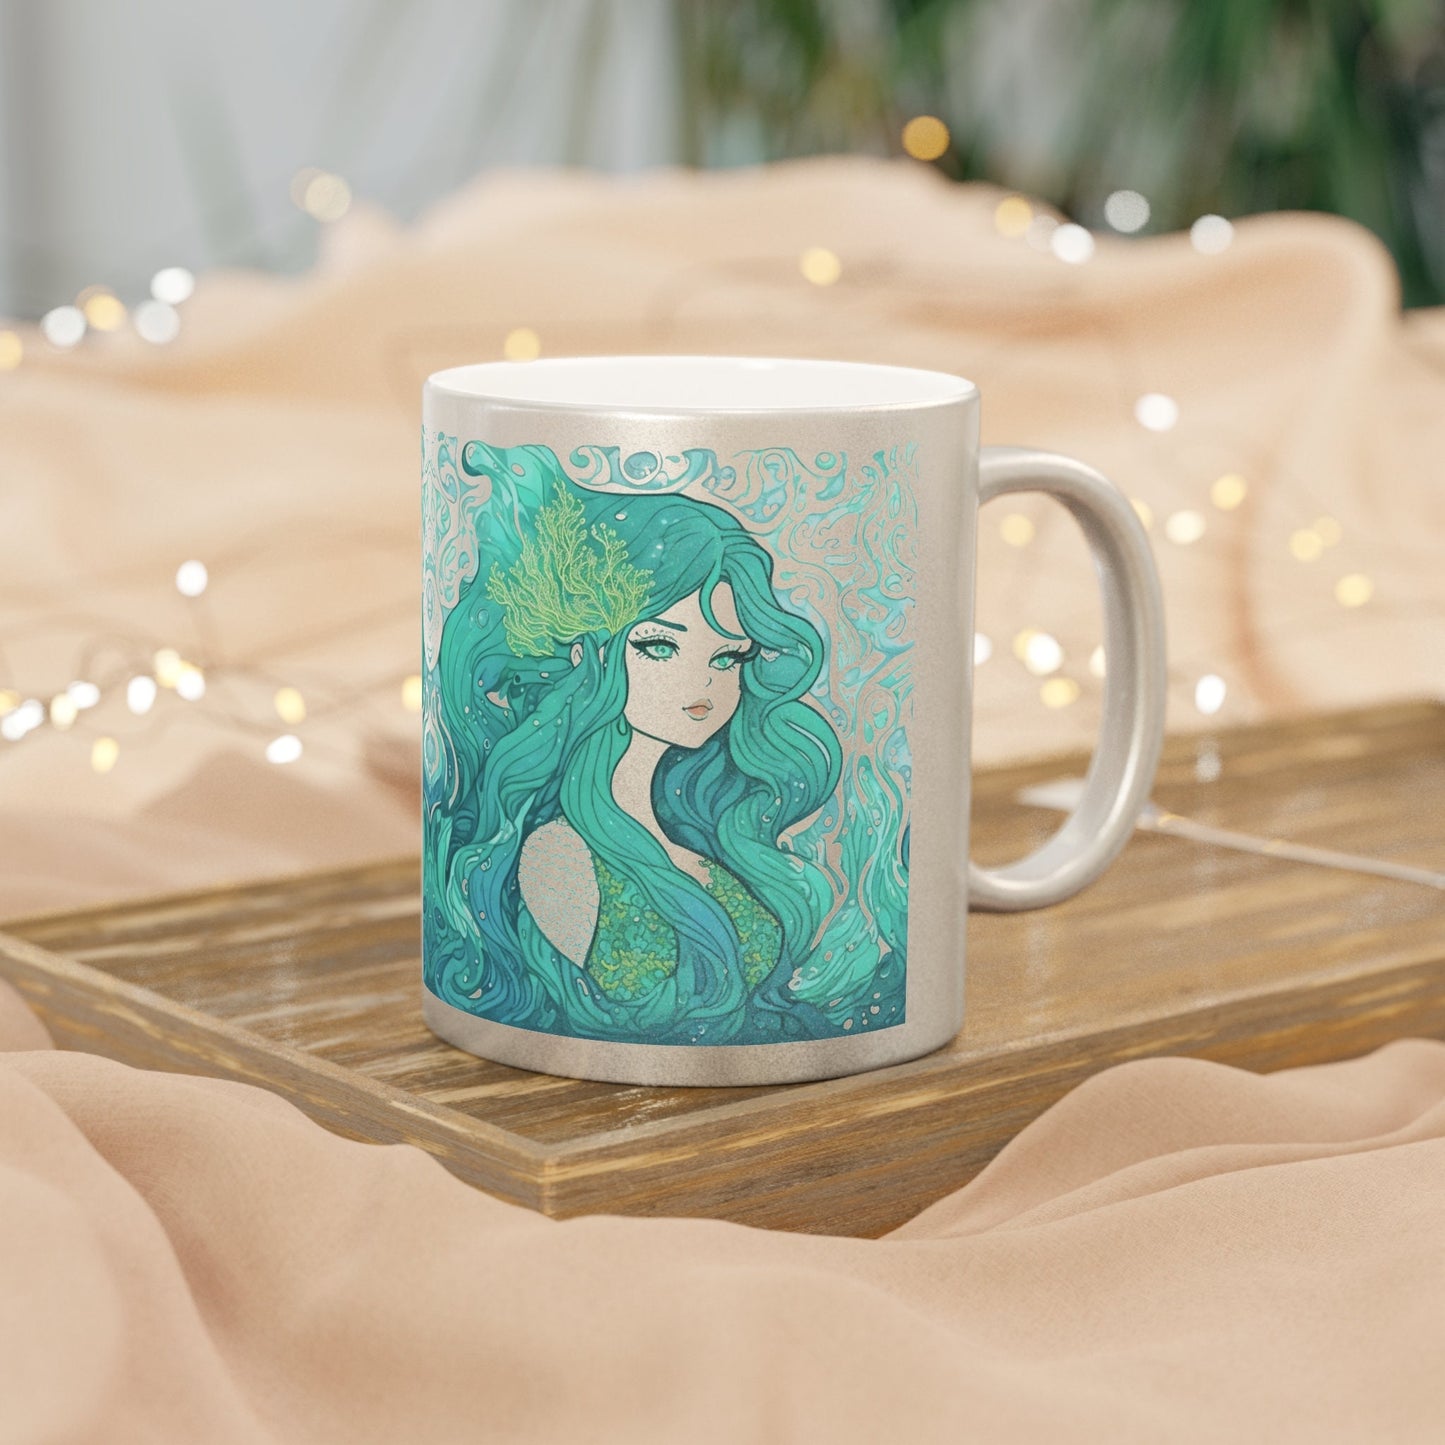 Metallic Mermaid Mug Gift Gold Mermaid Silver Mug Blue Mermaid Background Mug Sirens Mermaids Gift Art Nouveau Mermaid Aesthetic Gift Mug #1